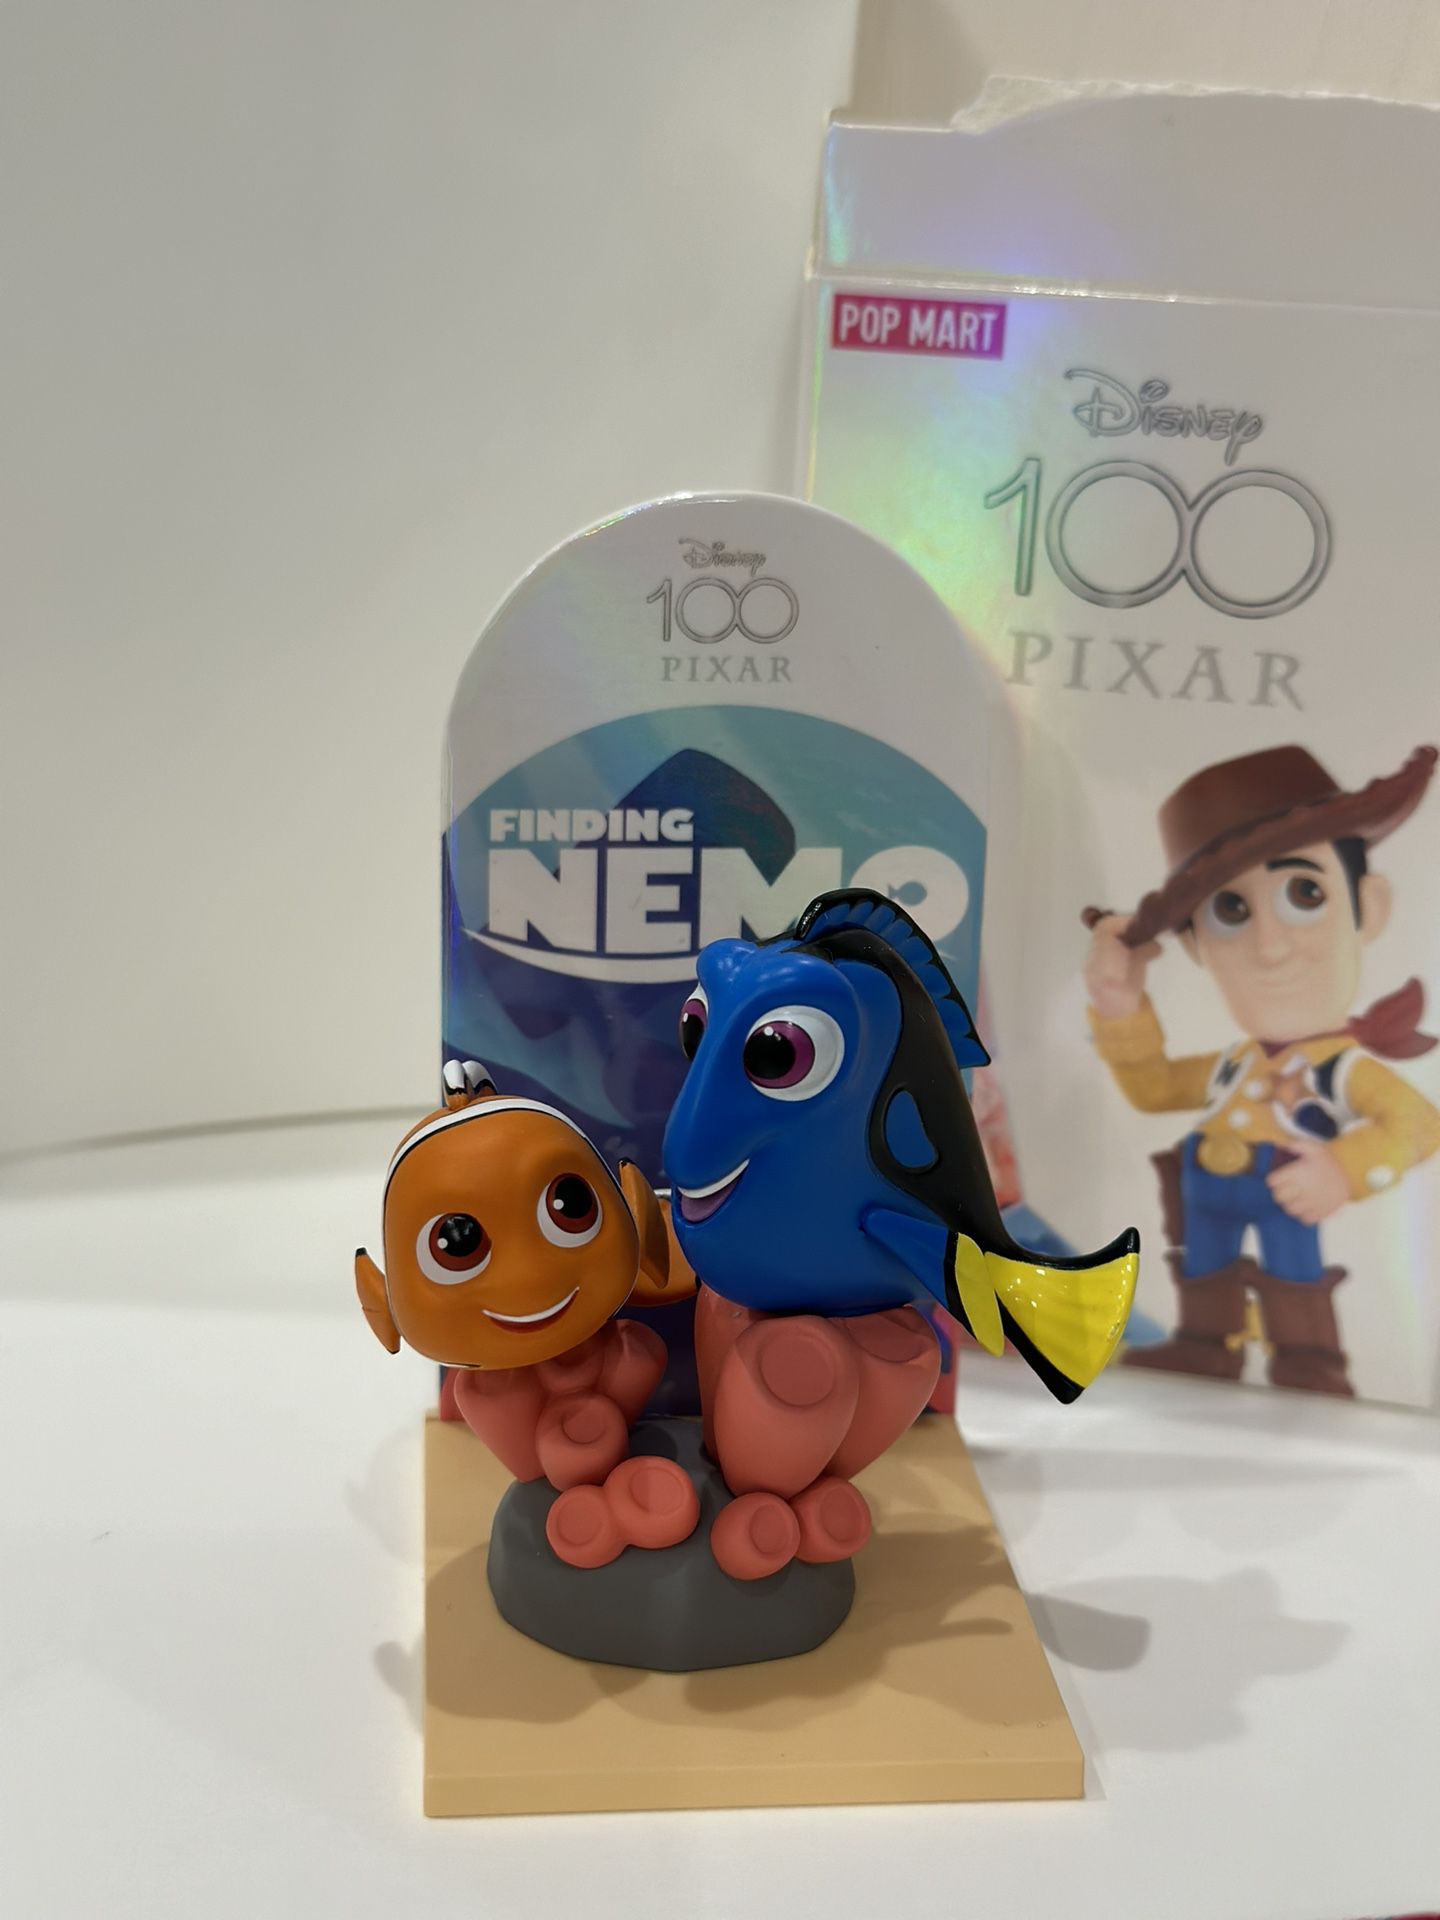 Pop Mart Disney 100th Anniversary Pixar Finding Nemo  (from JAPAN)